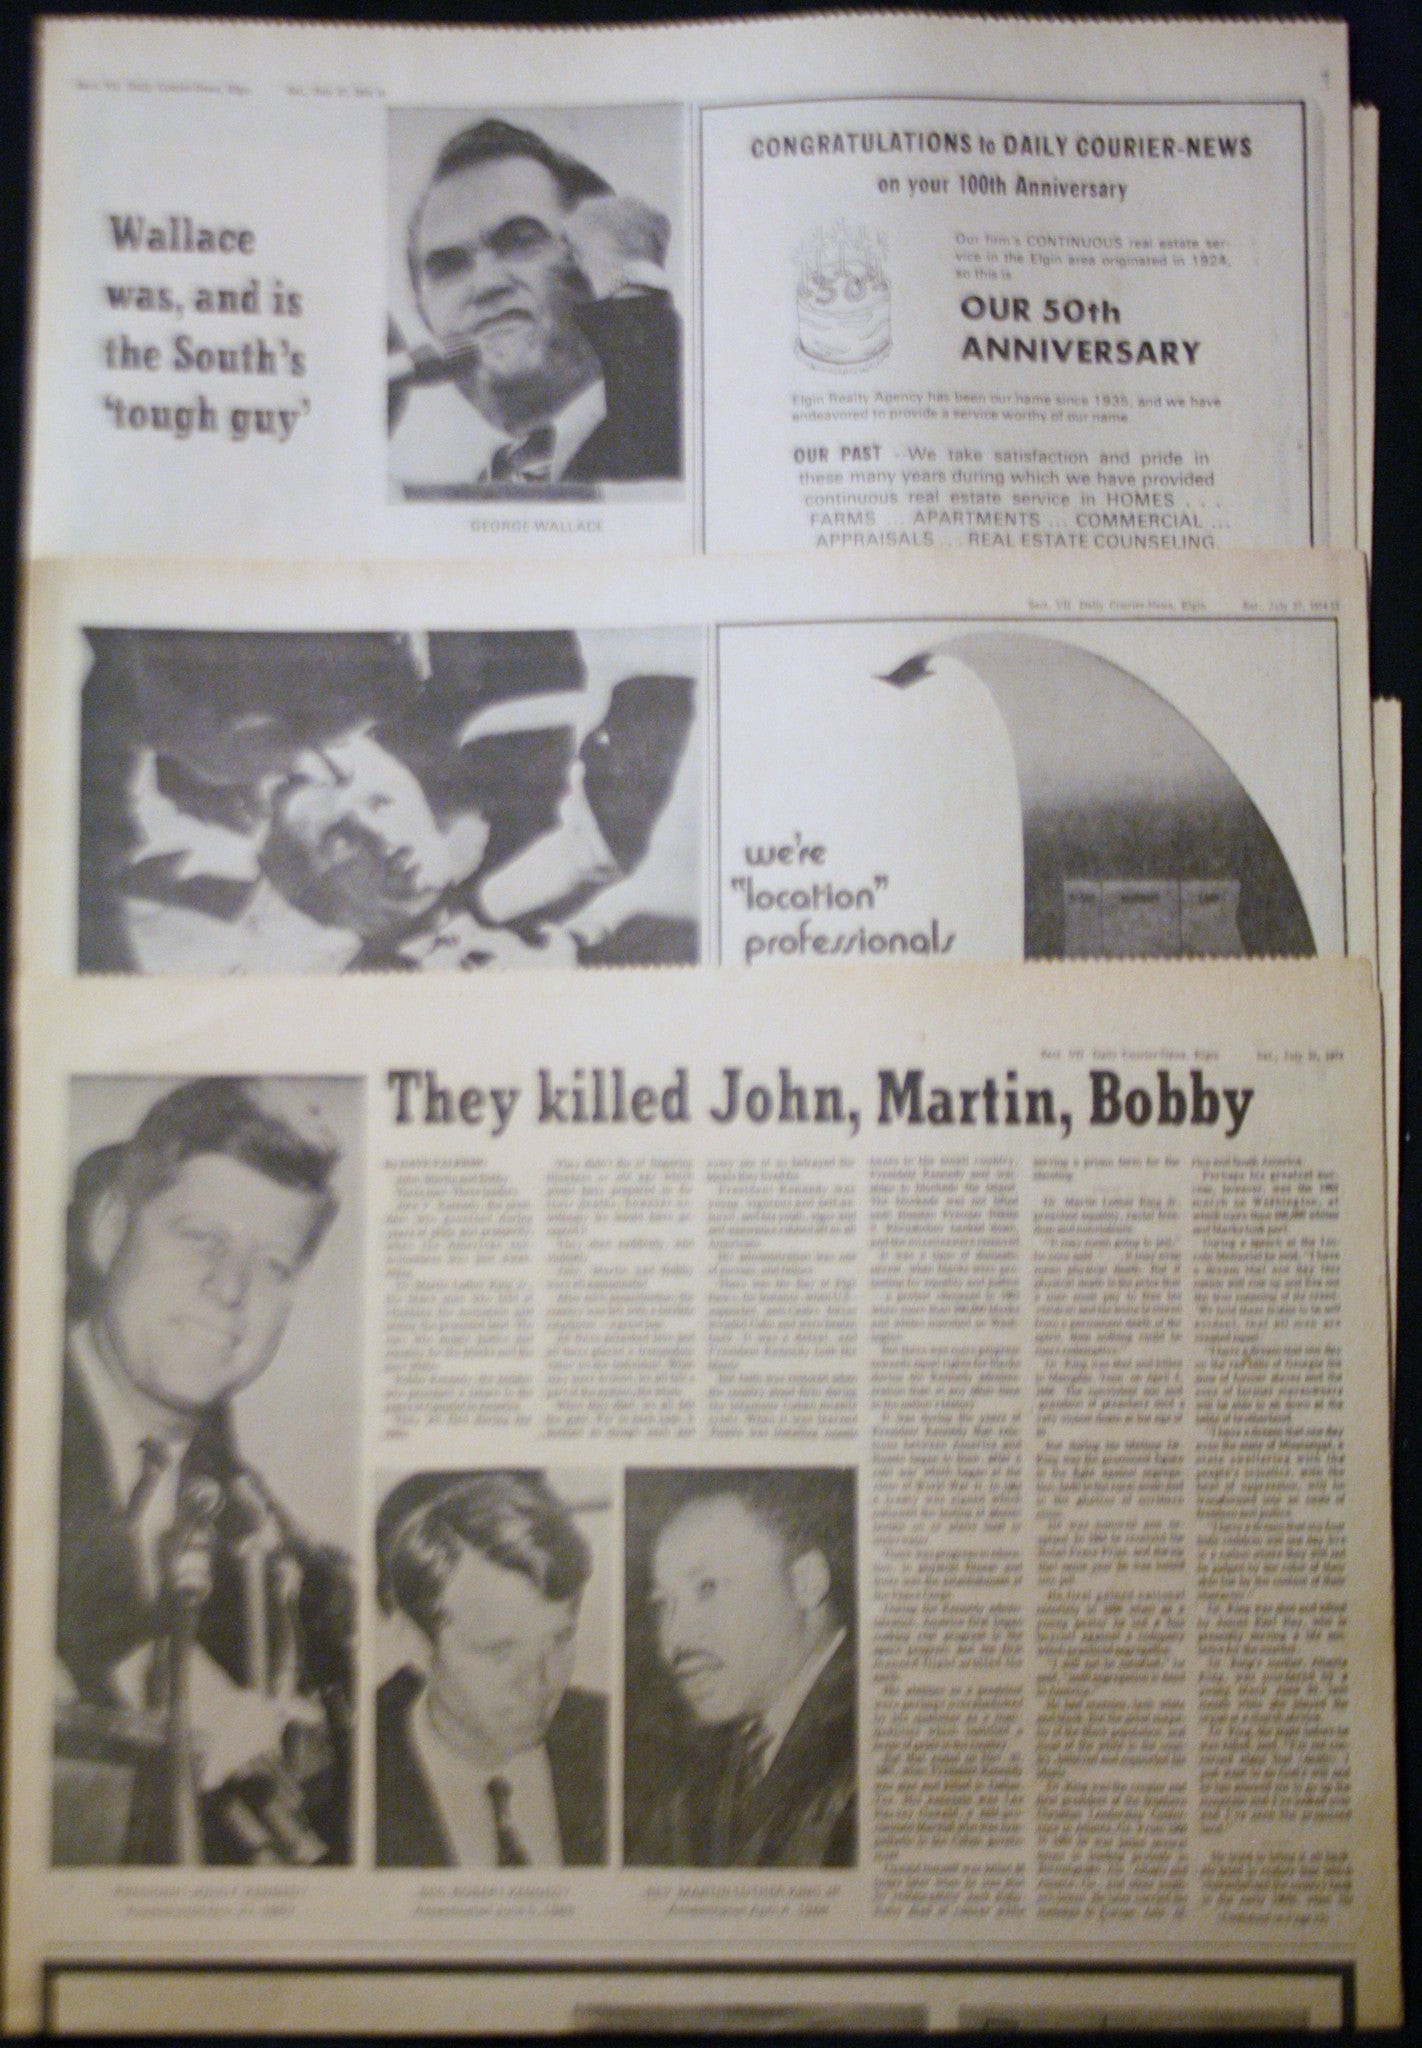 07 27 1973 MLK JFK and RFK George Wallace